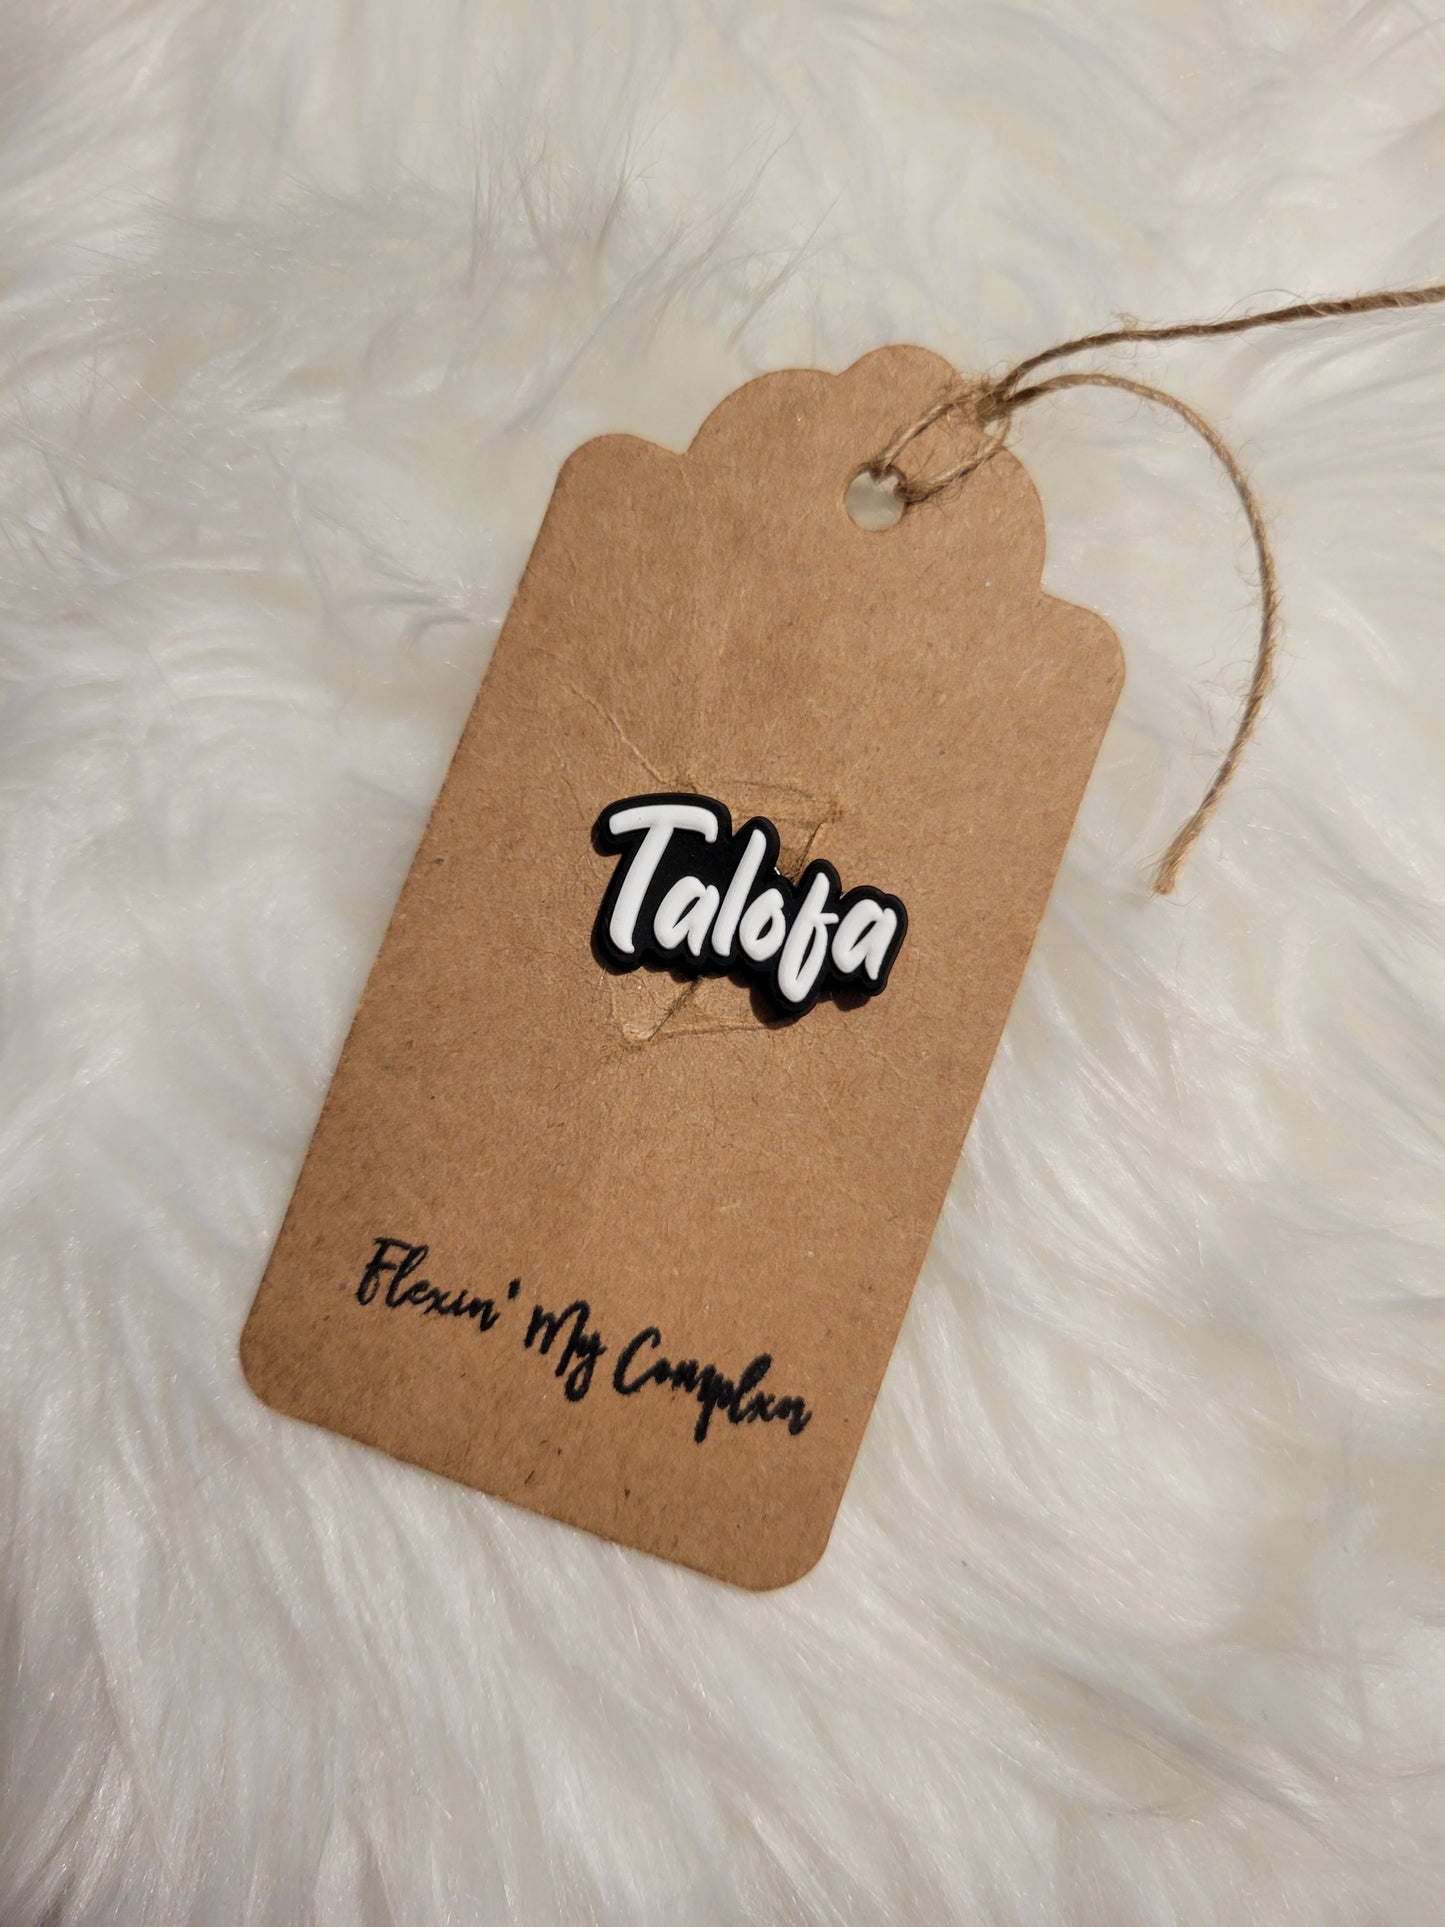 Talofa